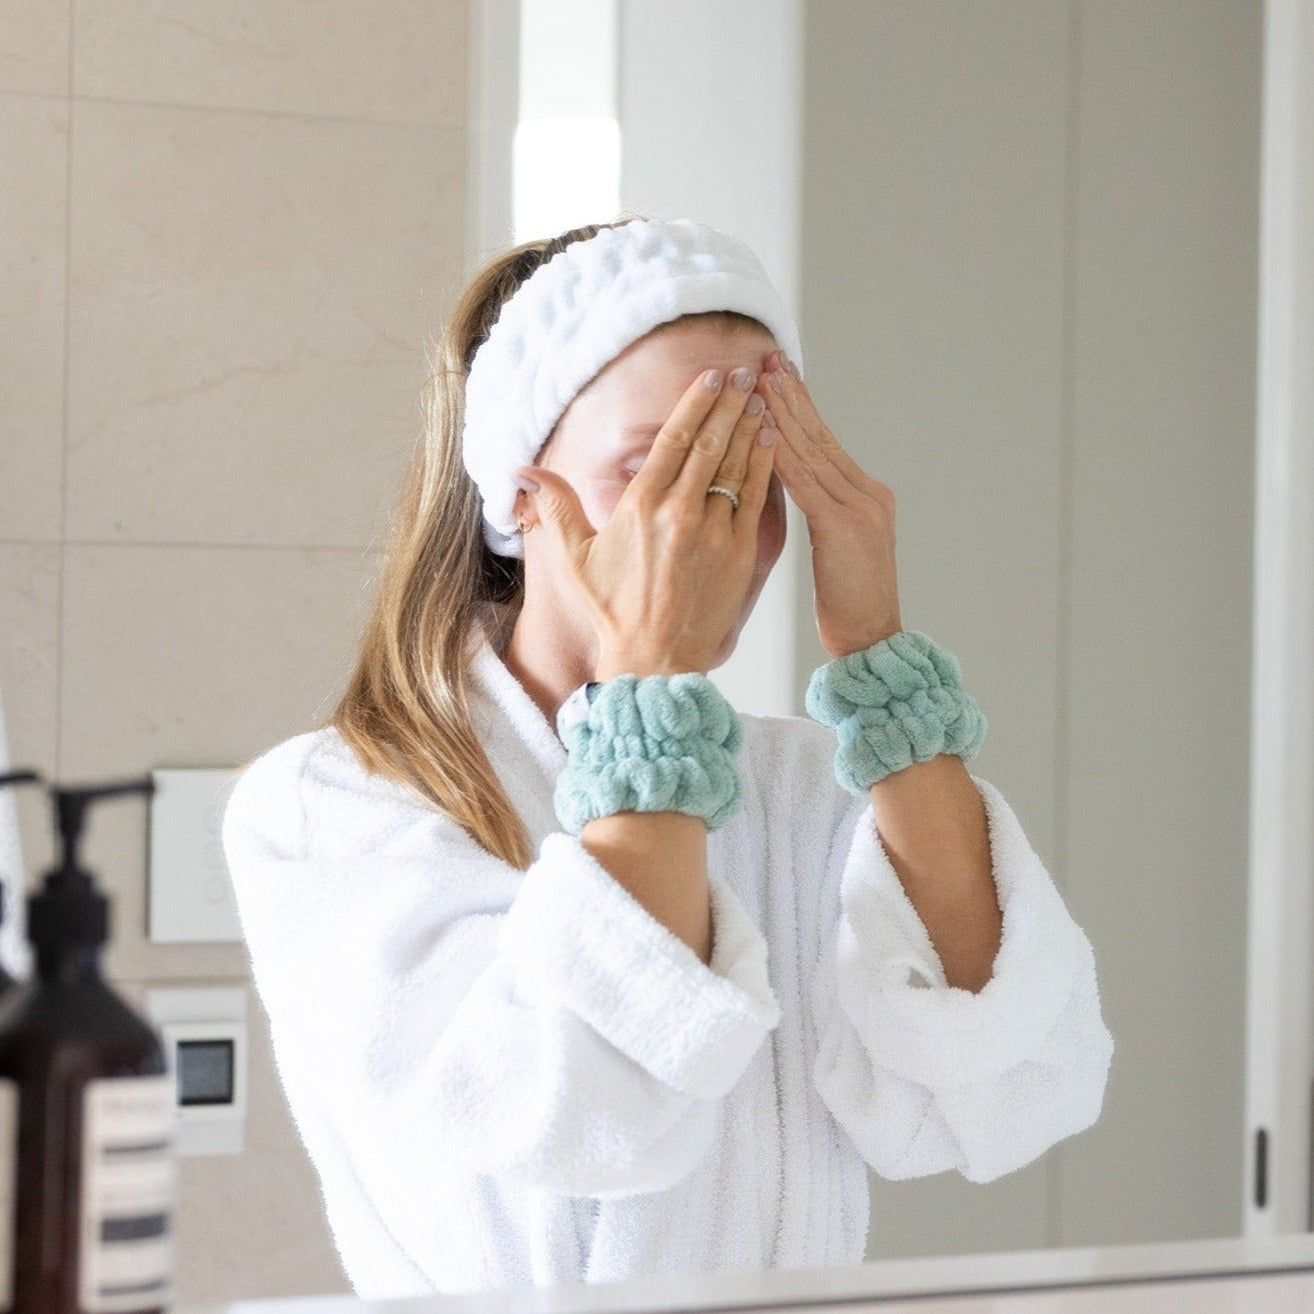 Sage Green Wash Cuffs on wrists washing face